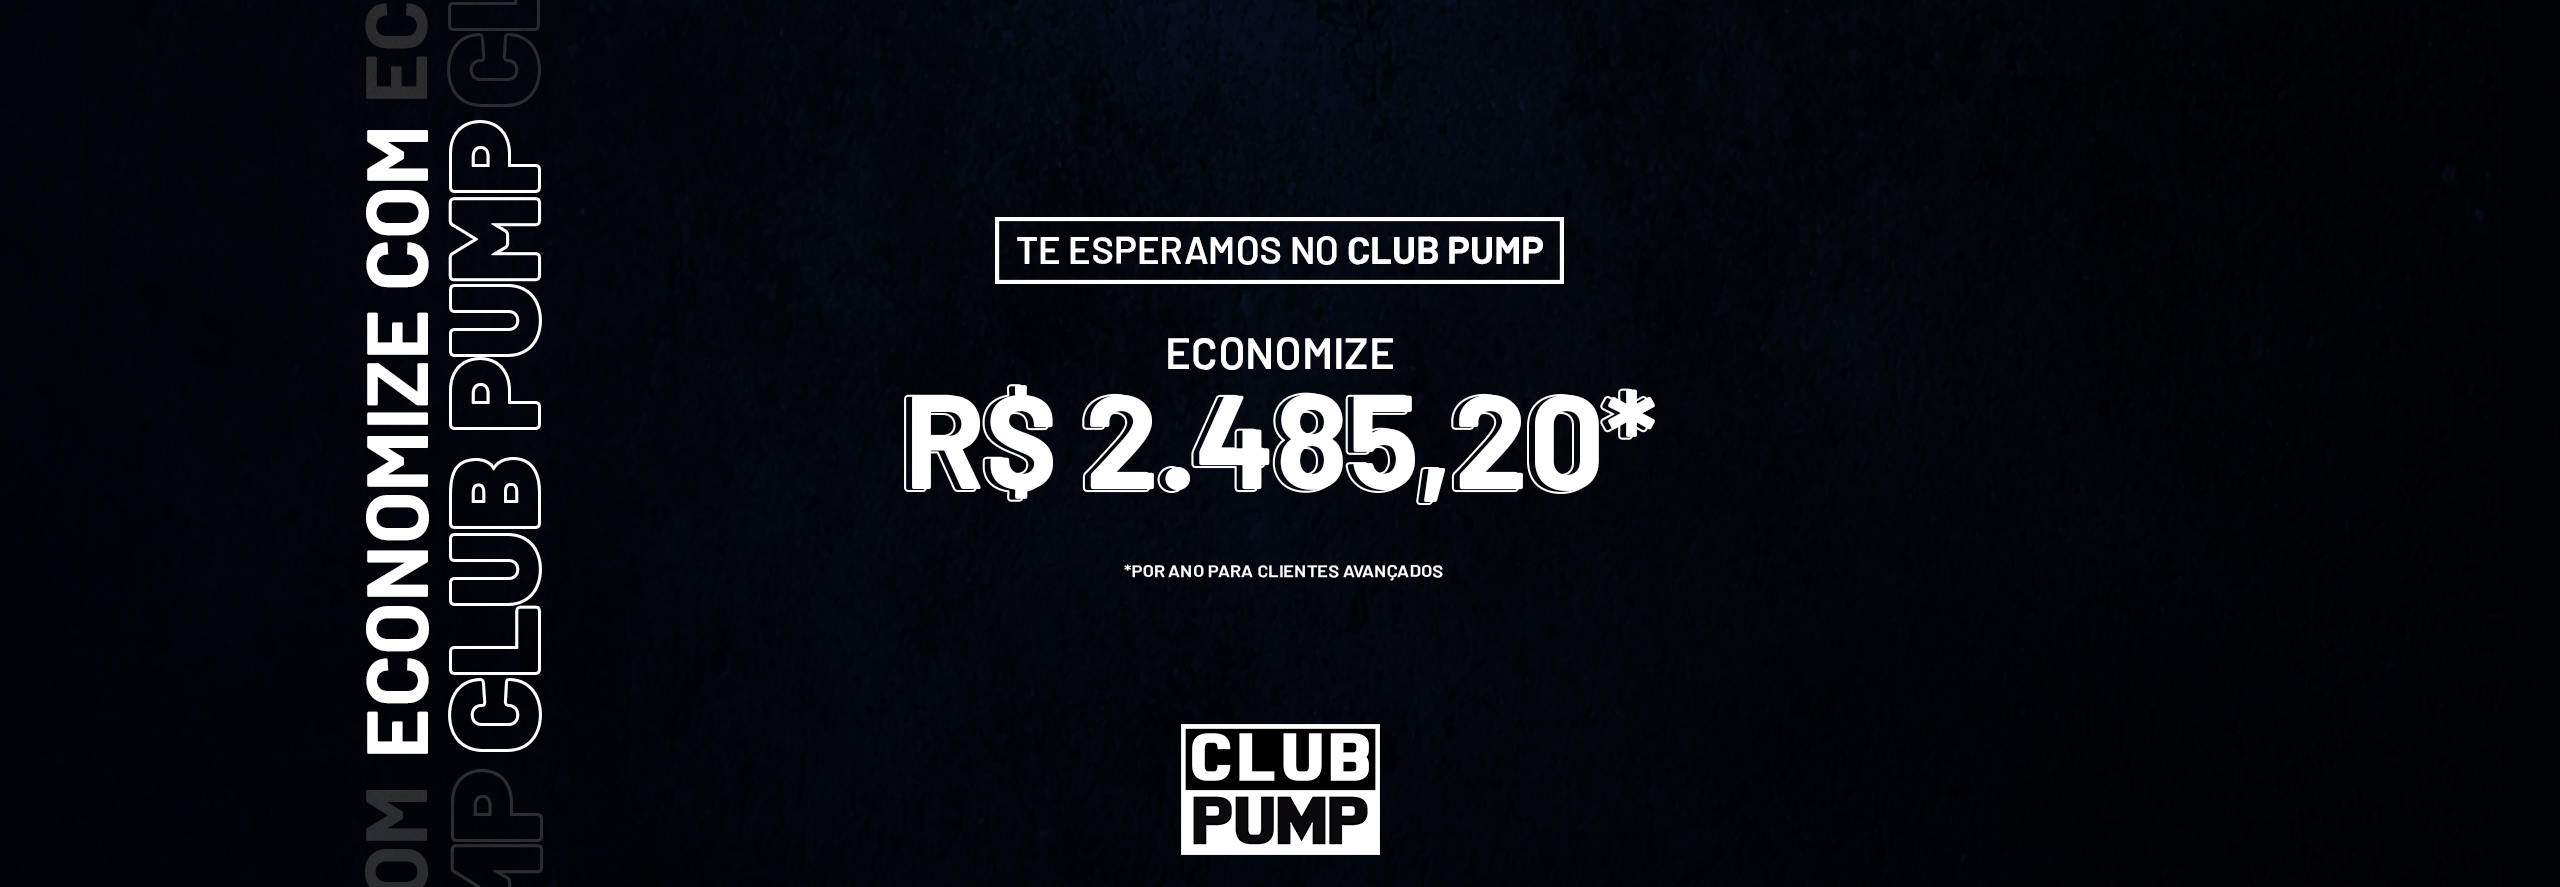 Club Pump - Economize